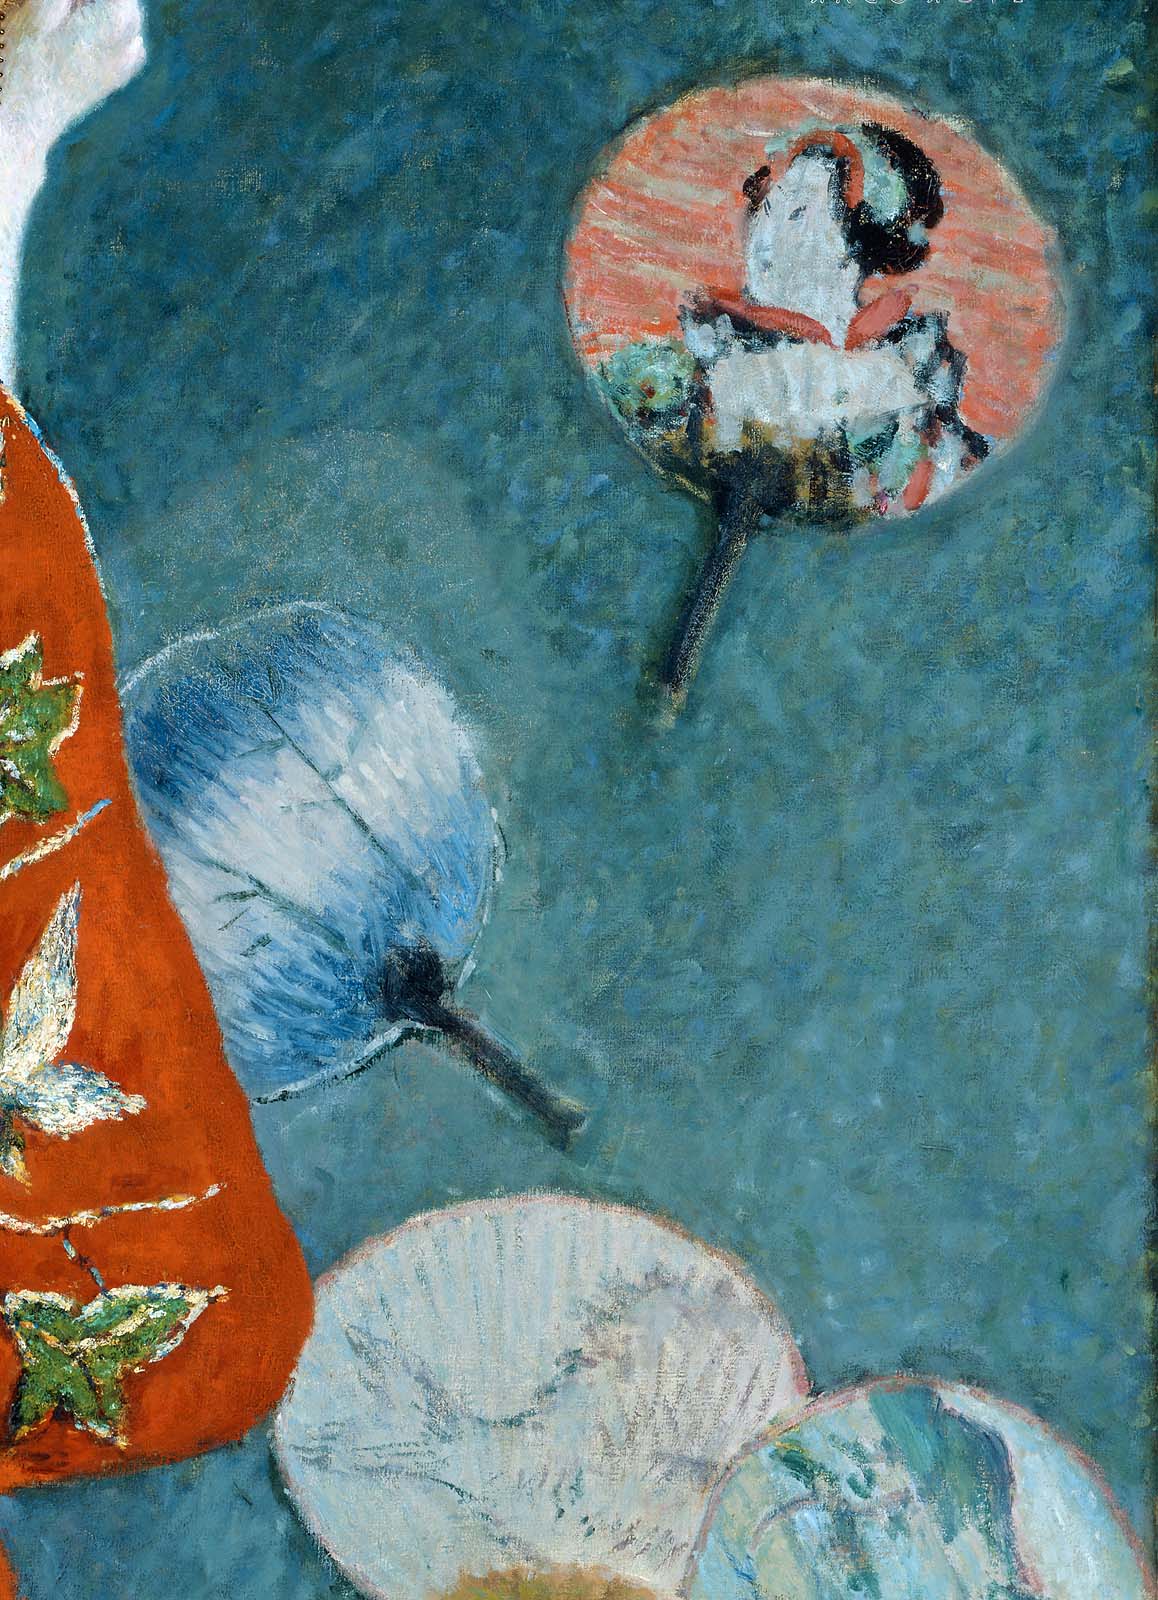 Claude+Monet-1840-1926 (358).jpg